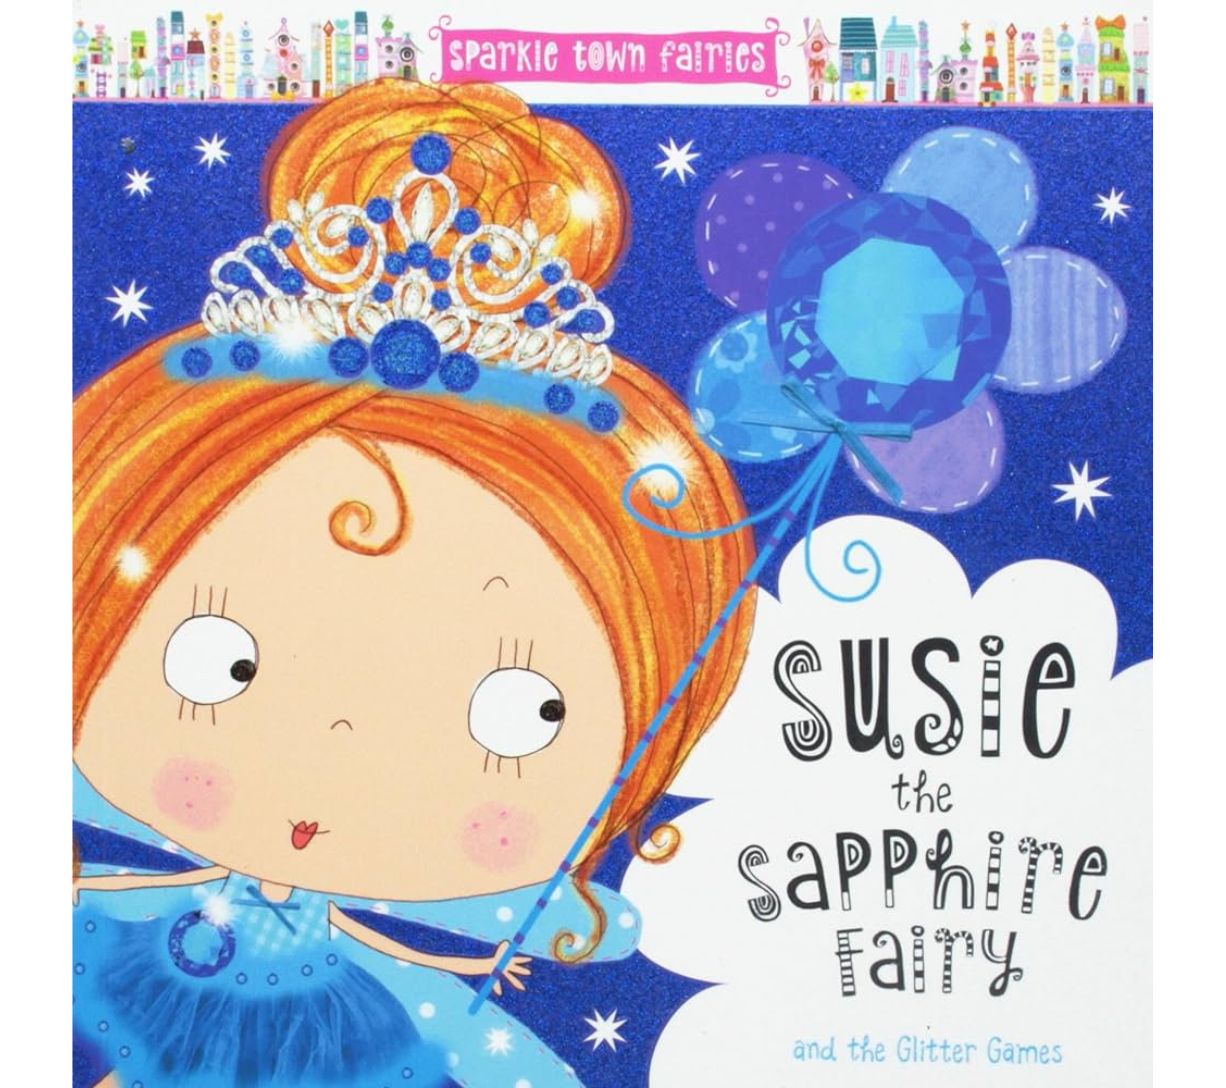 Susie the Sapphire Fairy